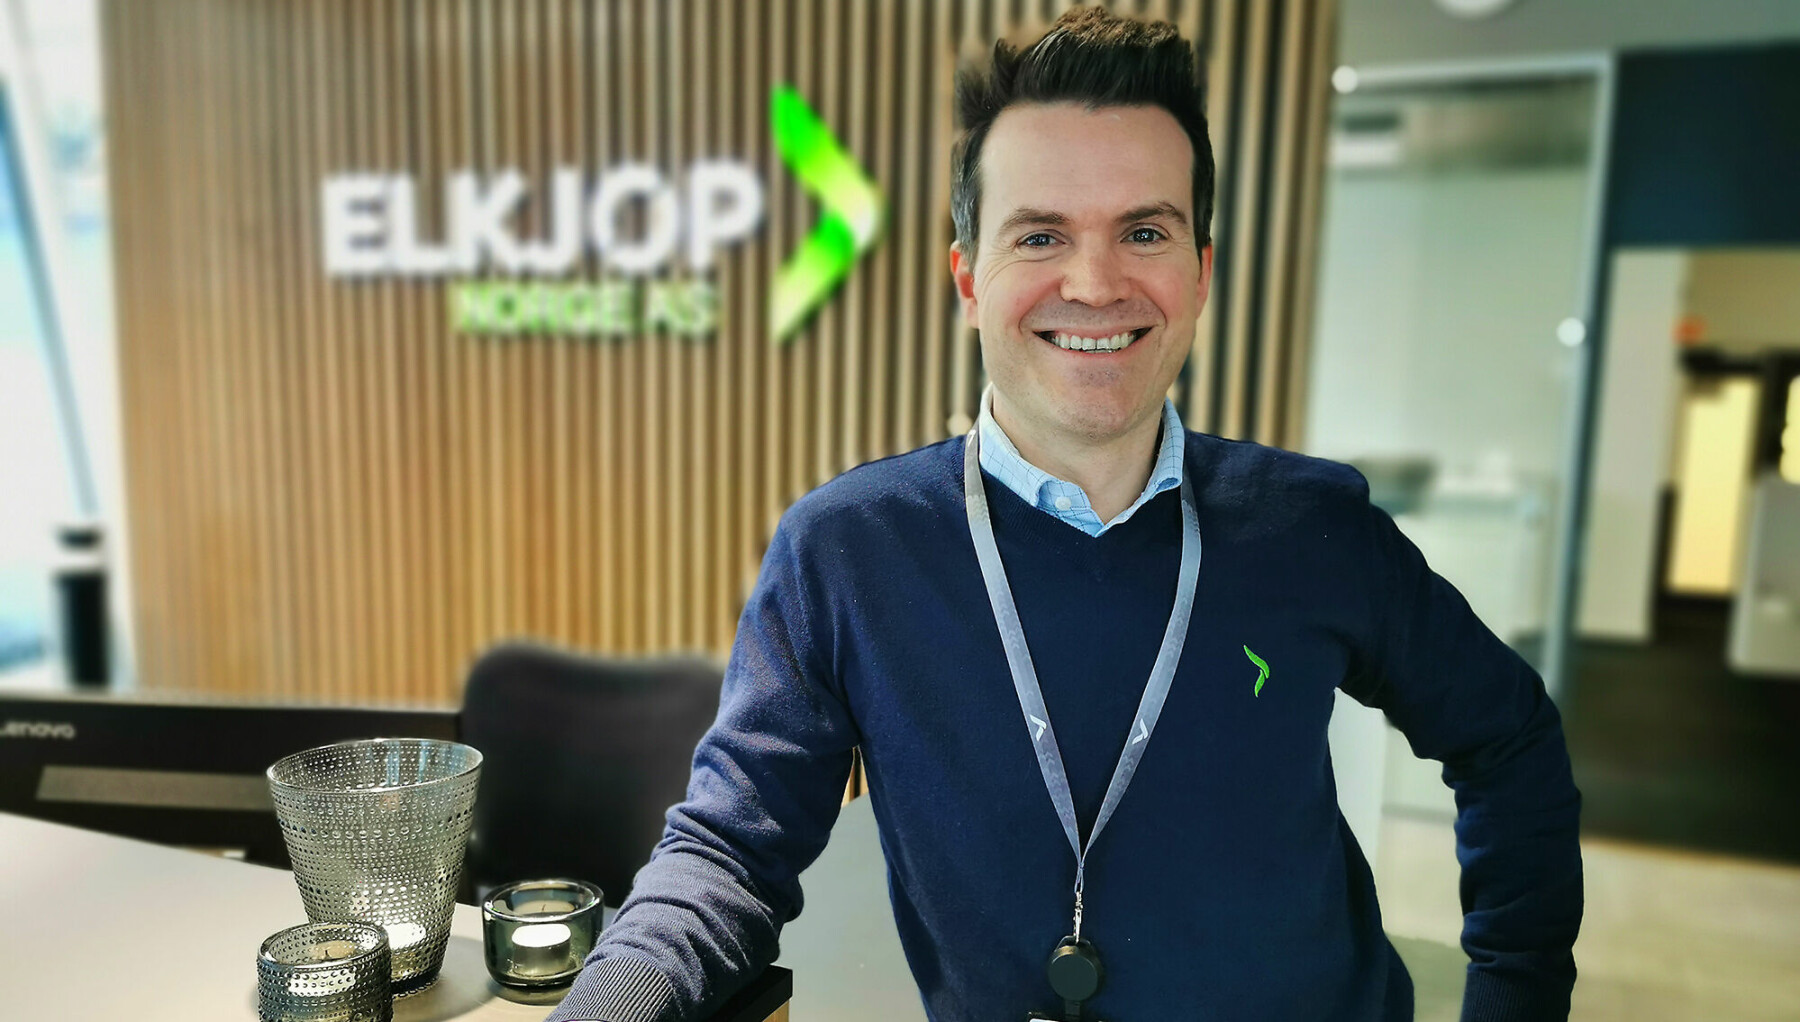 Trygve Hillesland tok over som adm. direktør i Elkjøp Norge i september 2021. Foto: Stian Sønsteng